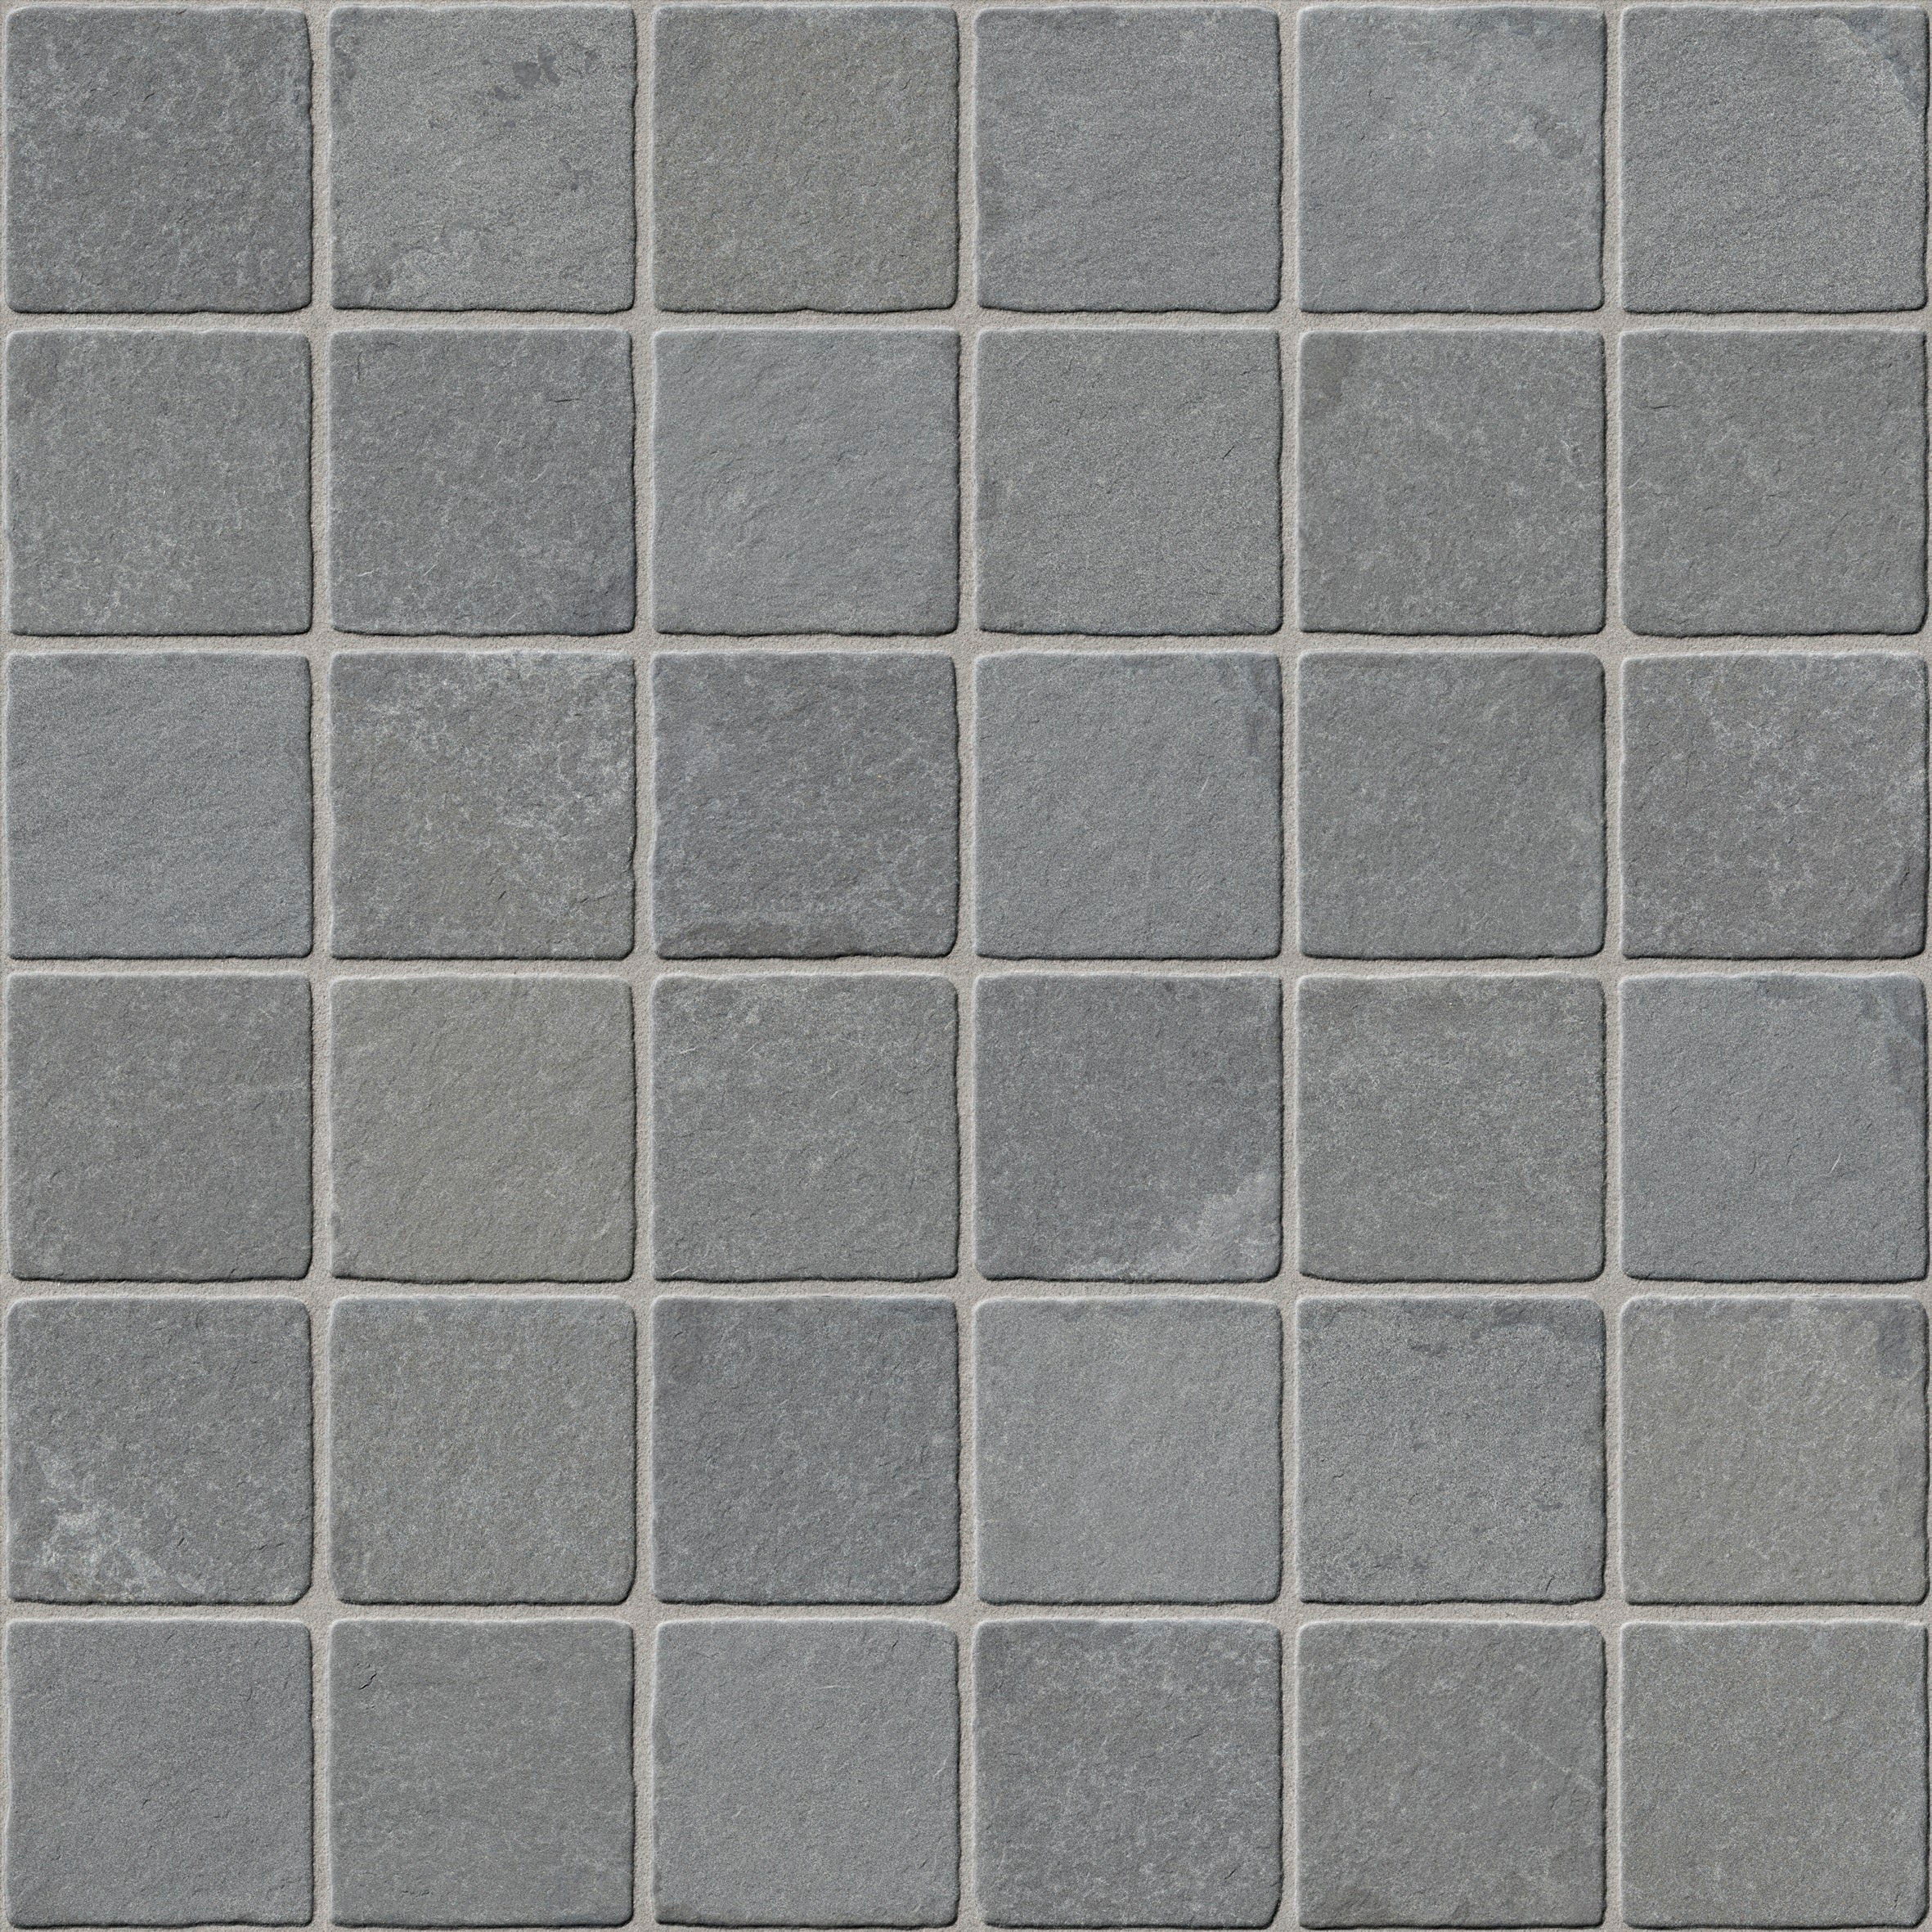 landmark frontier20 bluestone tumbled cobblestone cube paver tile 24x24x20mm matte rectified porcelain tile distributed by surface group international